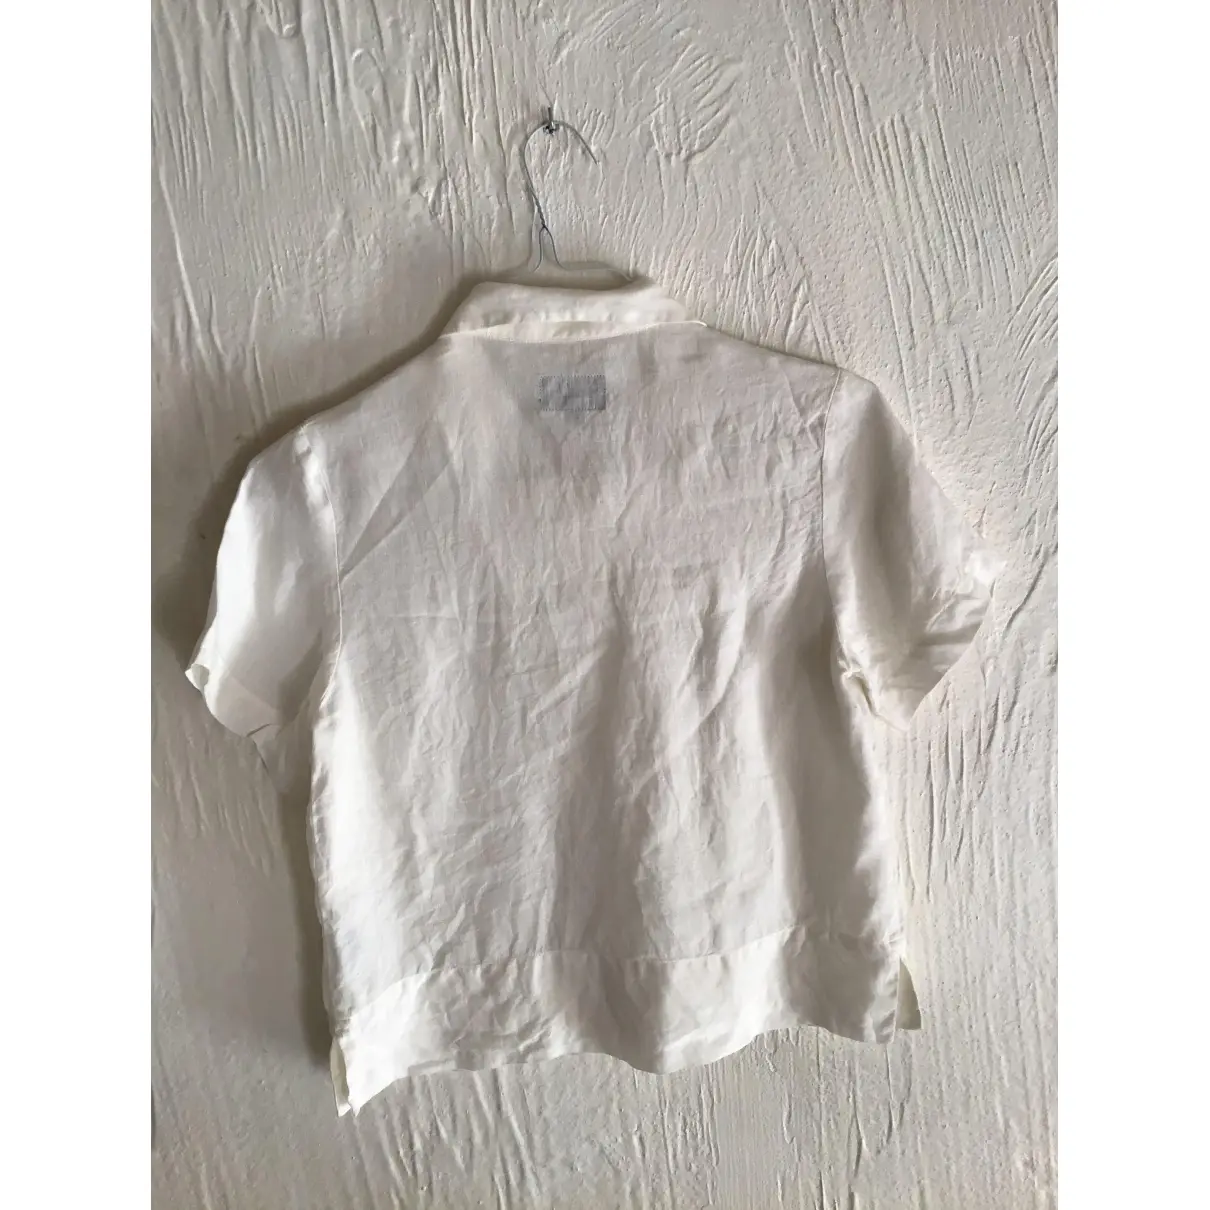 Hobbs Linen shirt for sale